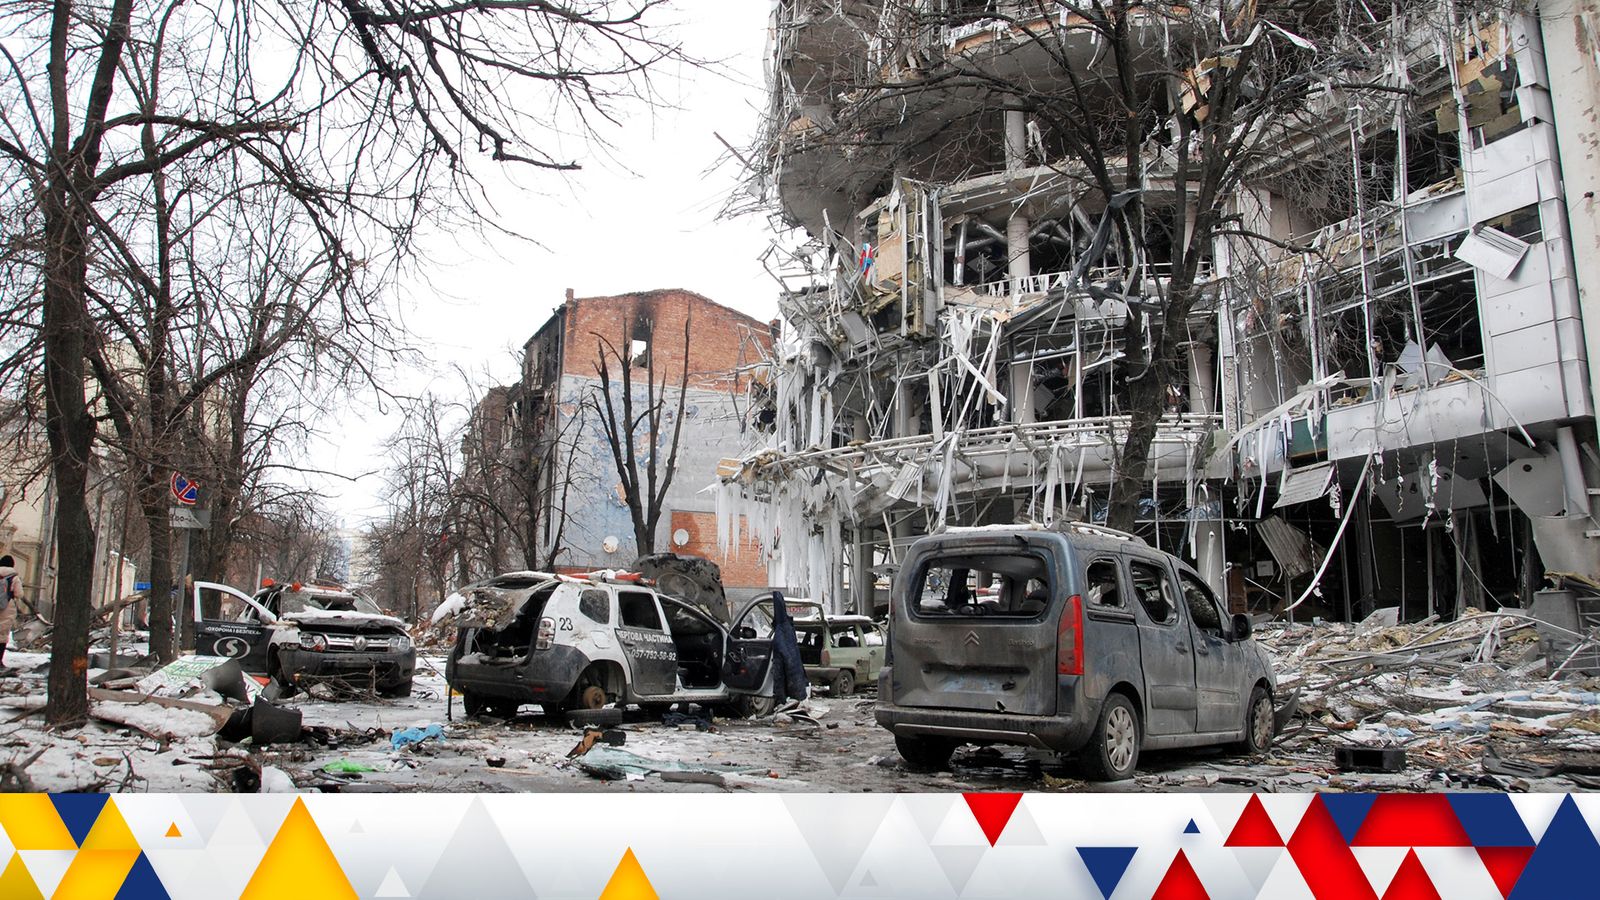 Kyiv ‘like apocalypse movie’; Zelenskyy says negotiations will continue | Ukraine latest